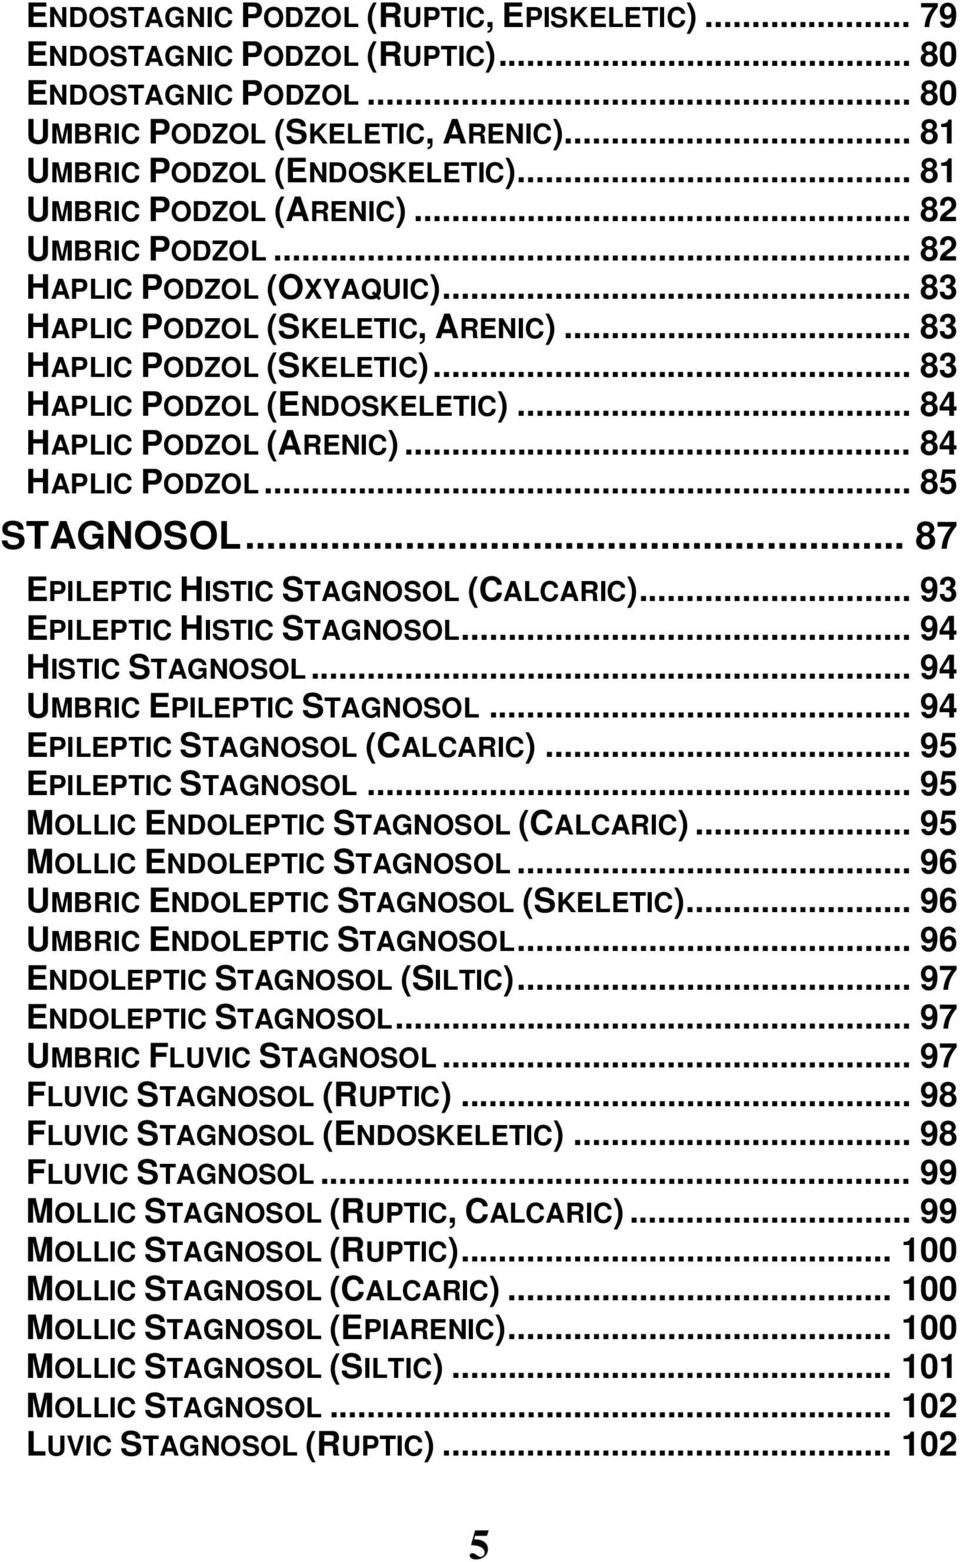 .. 84 HAPLIC PODZOL (ARENIC)... 84 HAPLIC PODZOL... 85 STAGNOSOL... 87 EPILEPTIC HISTIC STAGNOSOL (CALCARIC)... 93 EPILEPTIC HISTIC STAGNOSOL... 94 HISTIC STAGNOSOL... 94 UMBRIC EPILEPTIC STAGNOSOL.